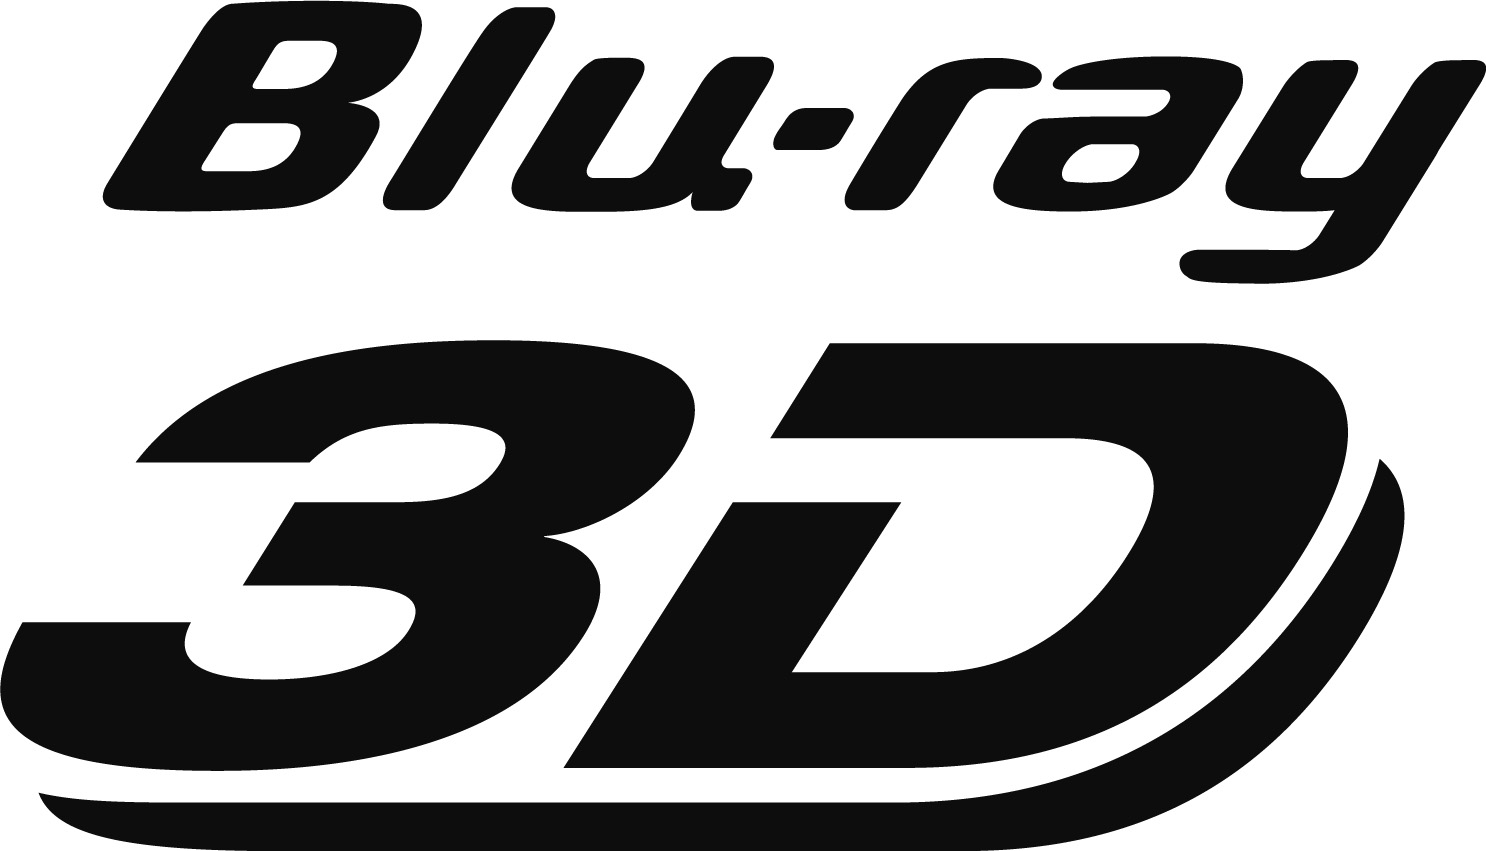 Bluray Logo